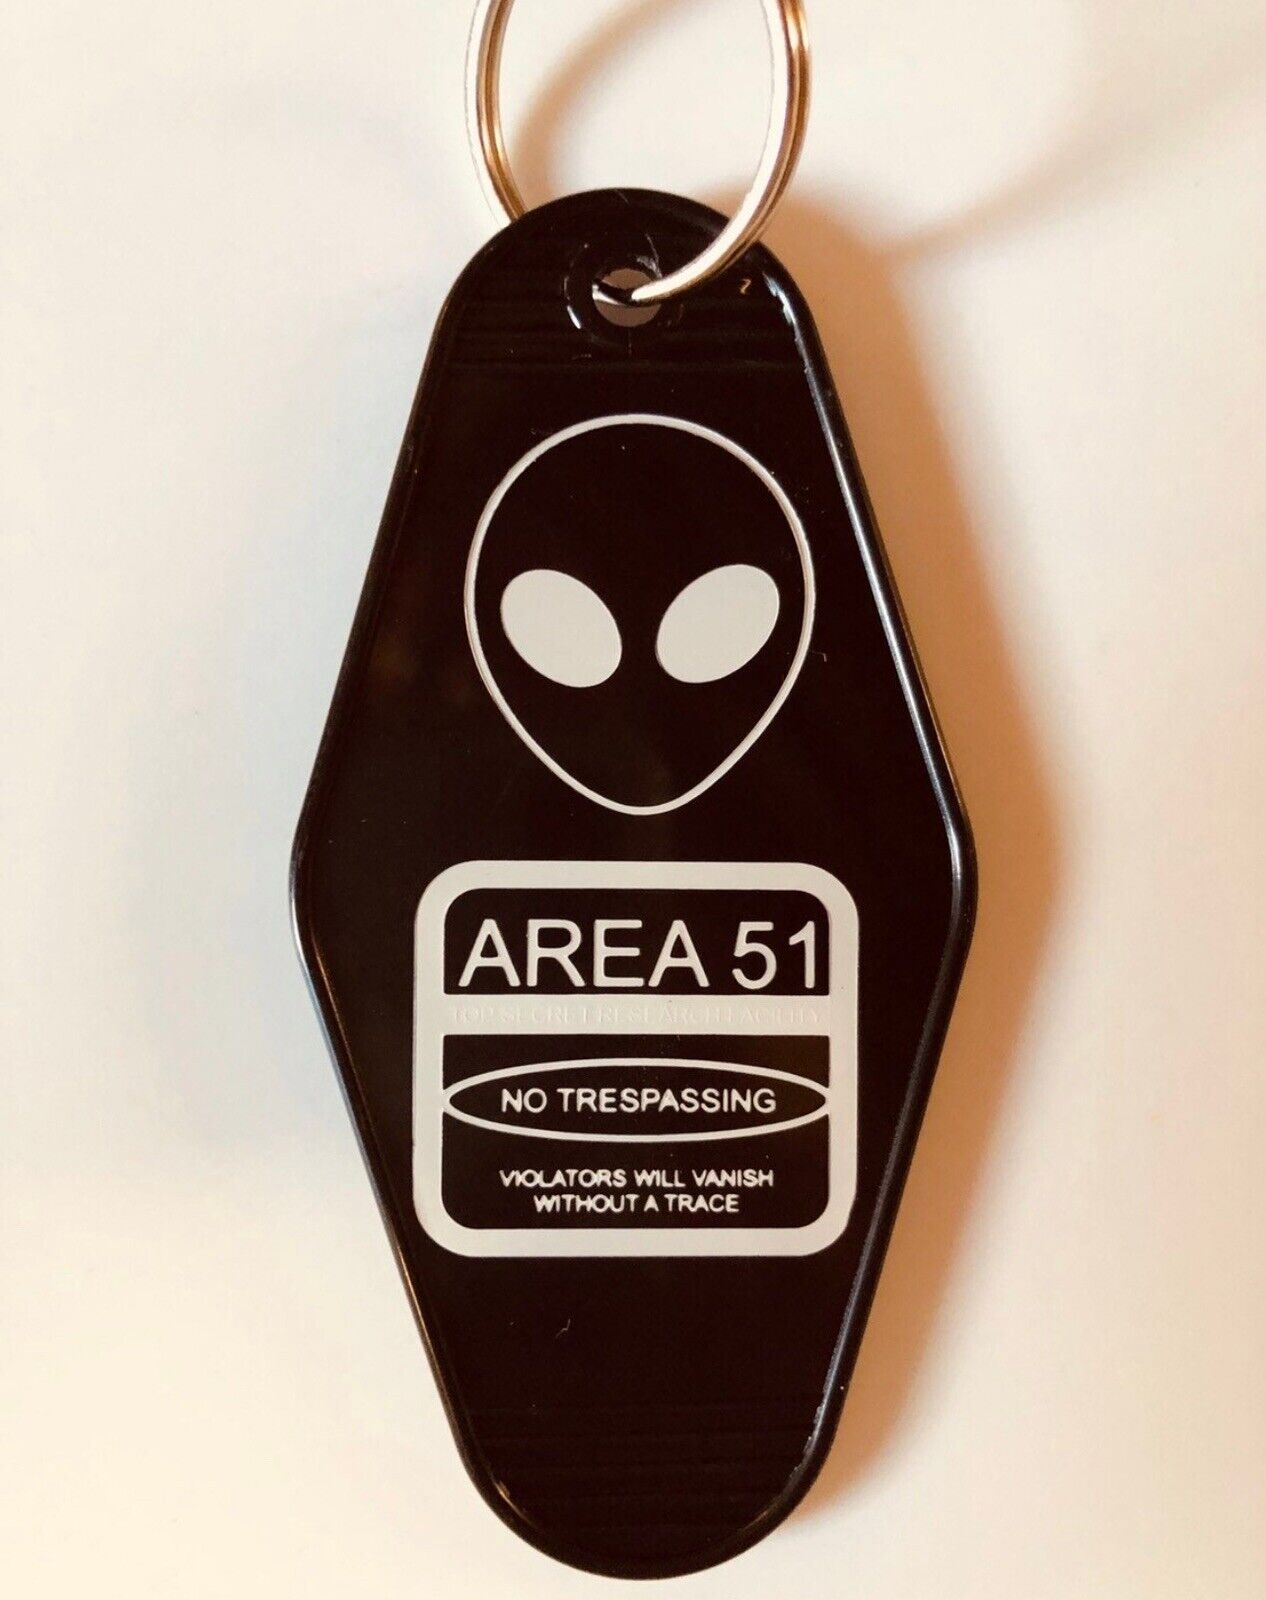 UFO inspired AREA 51 keytag